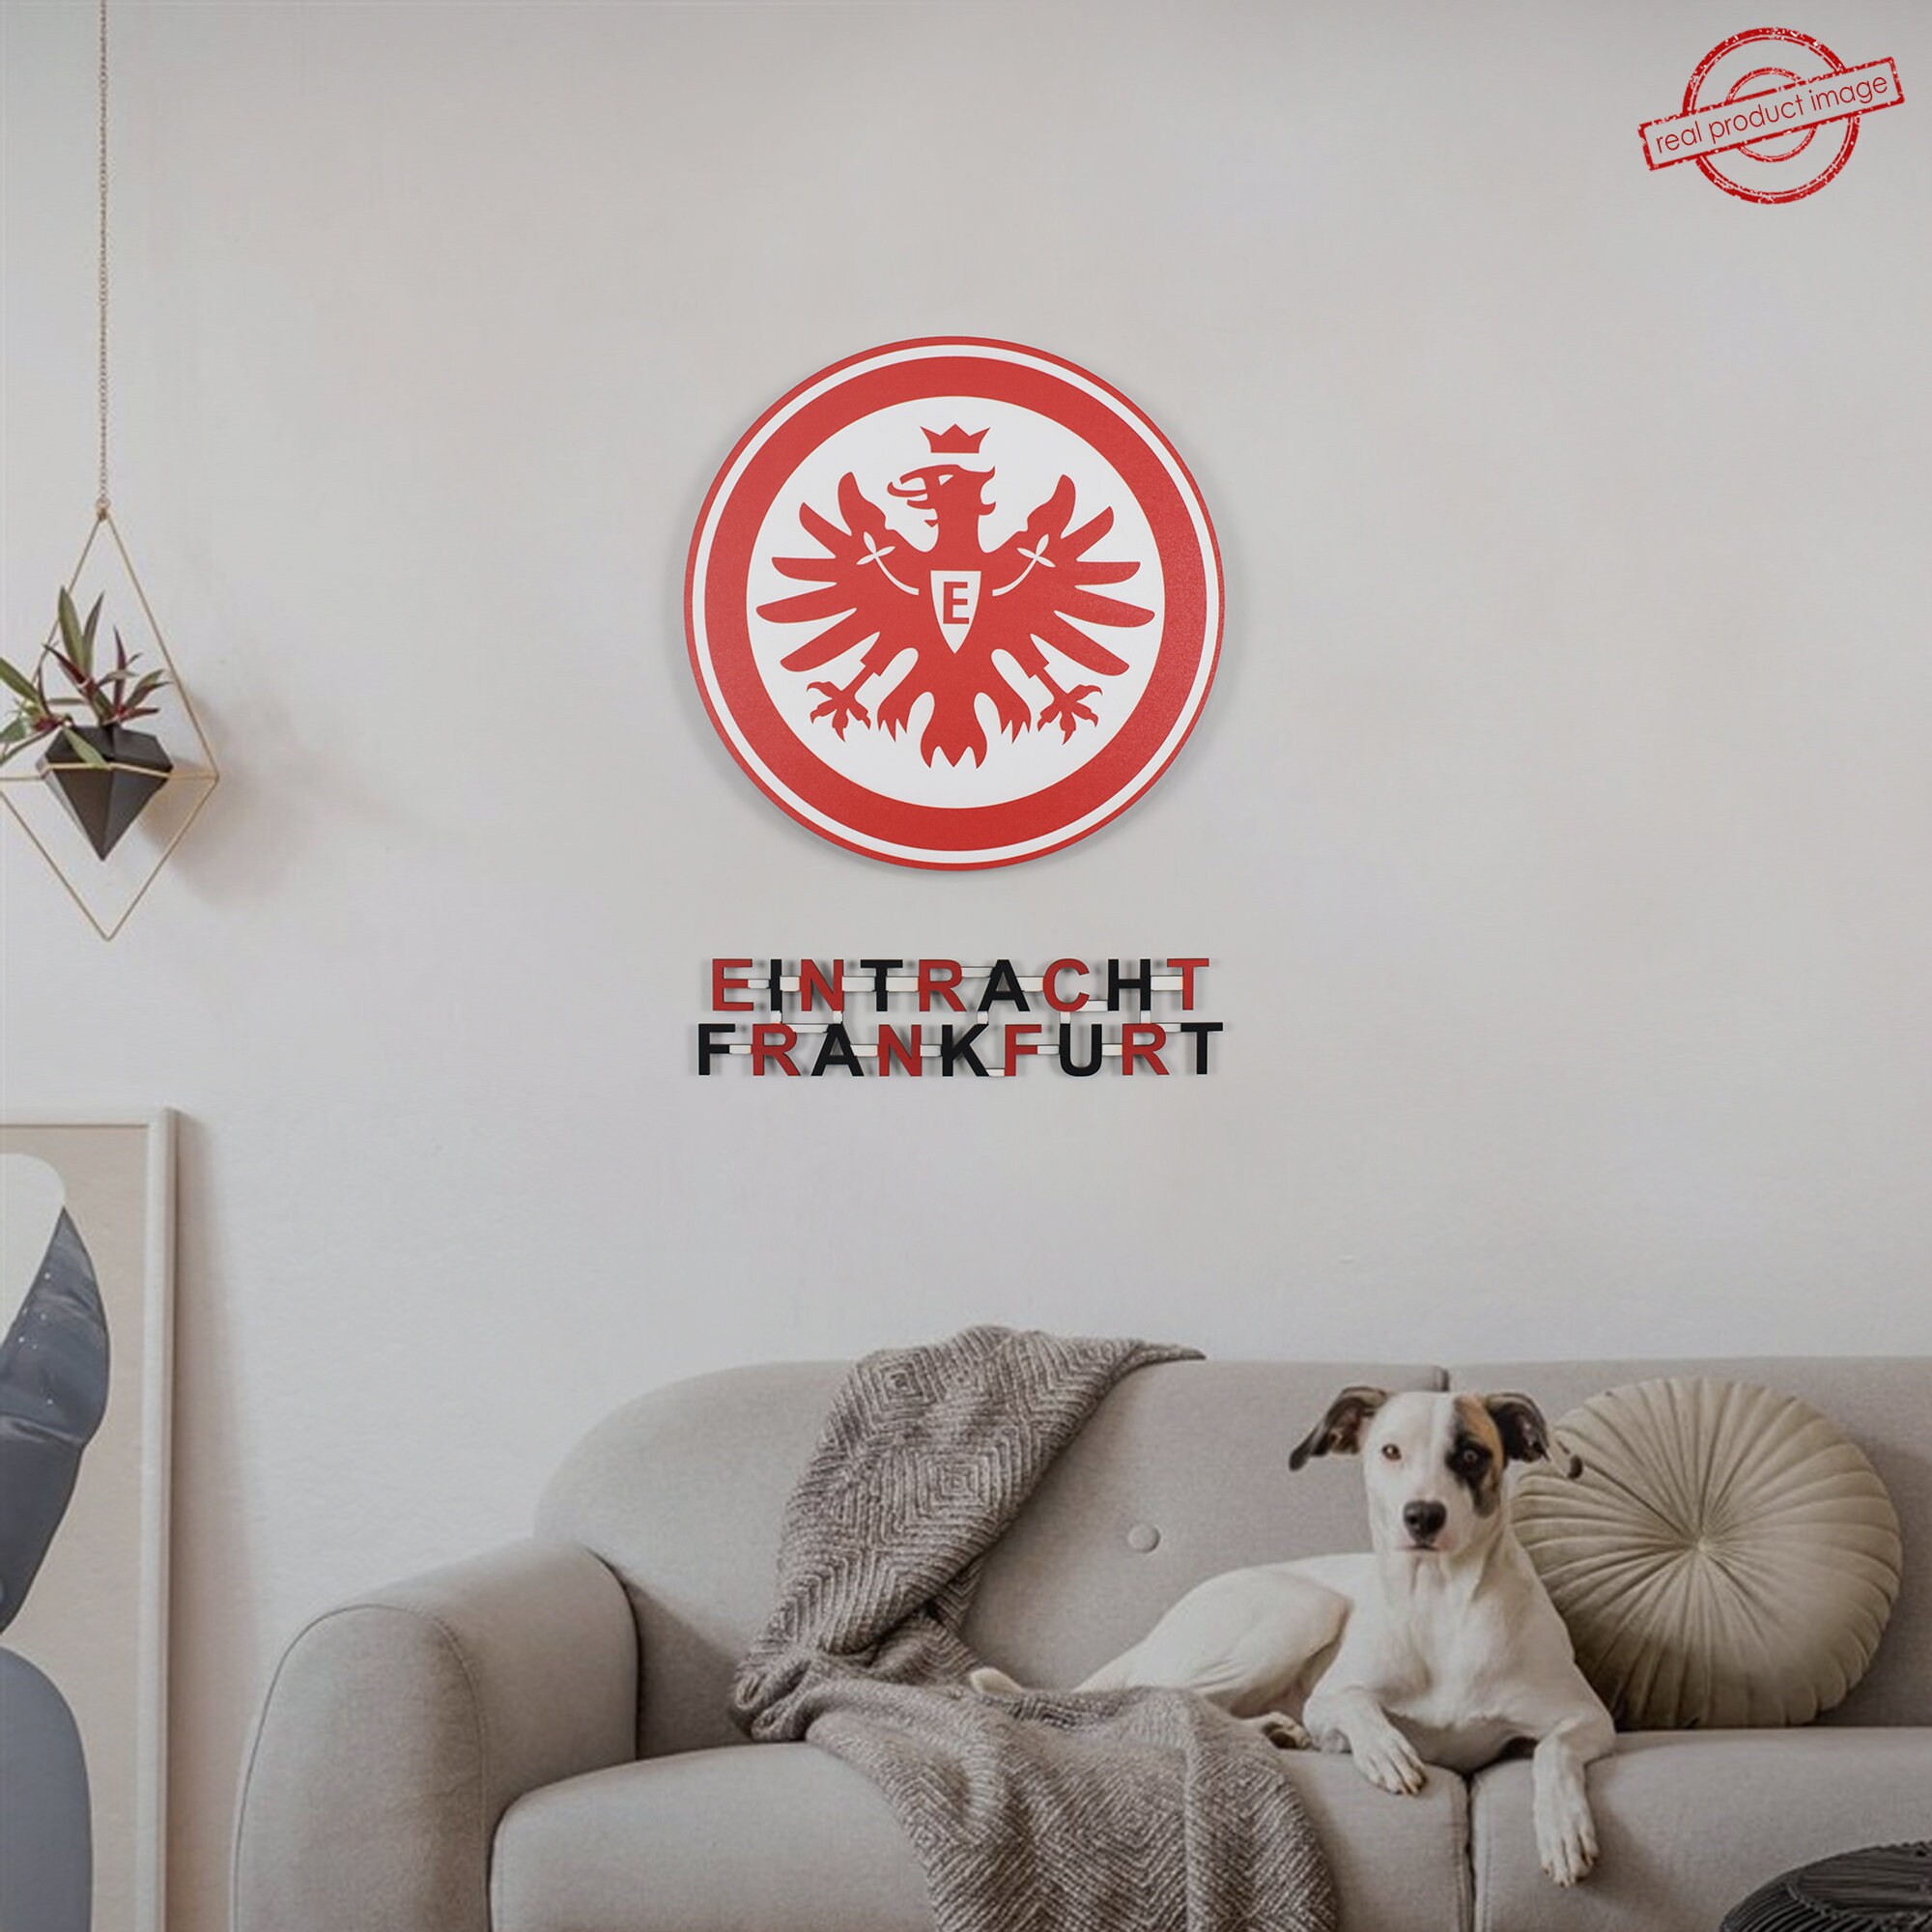 Eintracht Frankfurt Team Logo. Wall Art Eintracht Frankfurt. for Wall  Frankfurt. Eintracht Frankfurt Decor.wooden Frankfurt Logo Sticker. - Etsy  Hong Kong